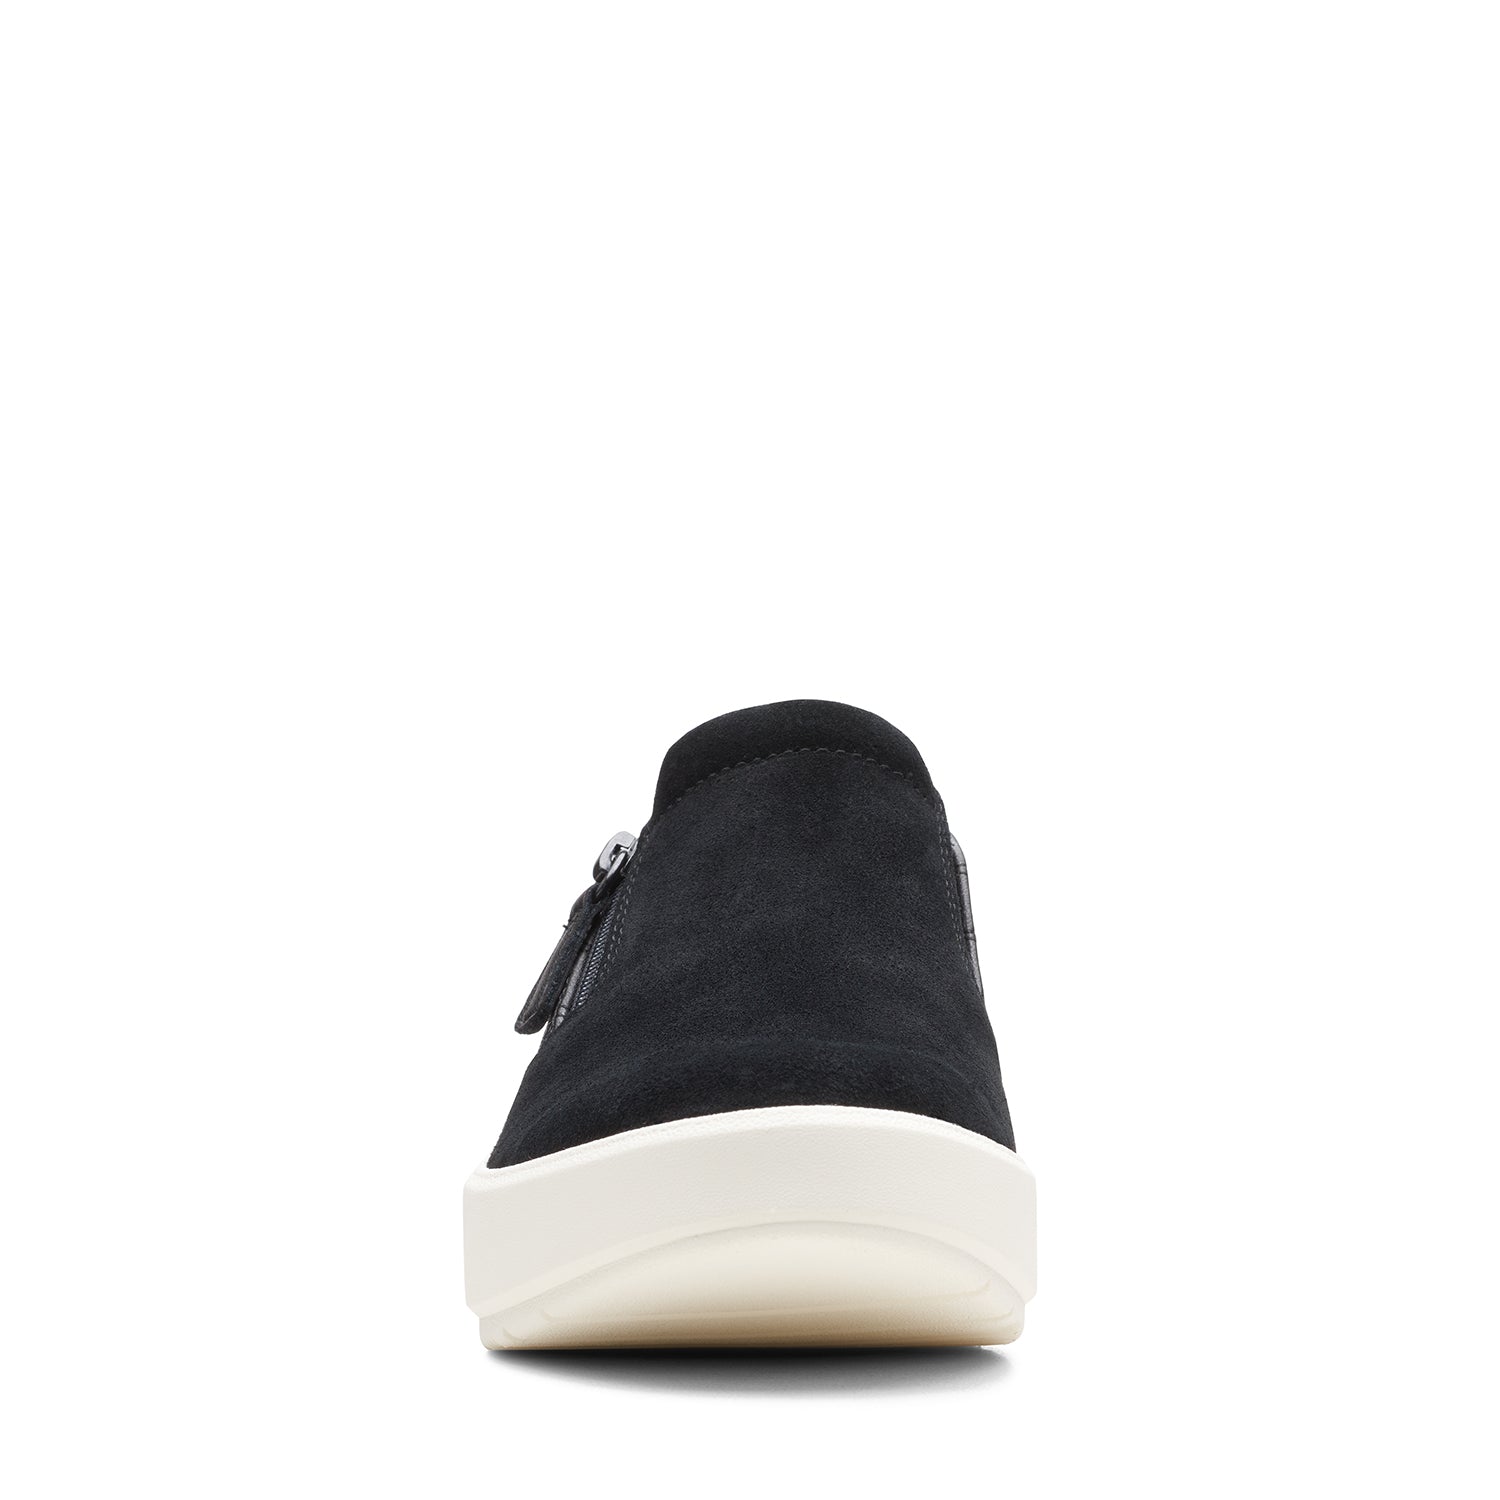 Clarks Layton Step Shoes - Black Combi - 261626254 - D Width (Standard Fit)